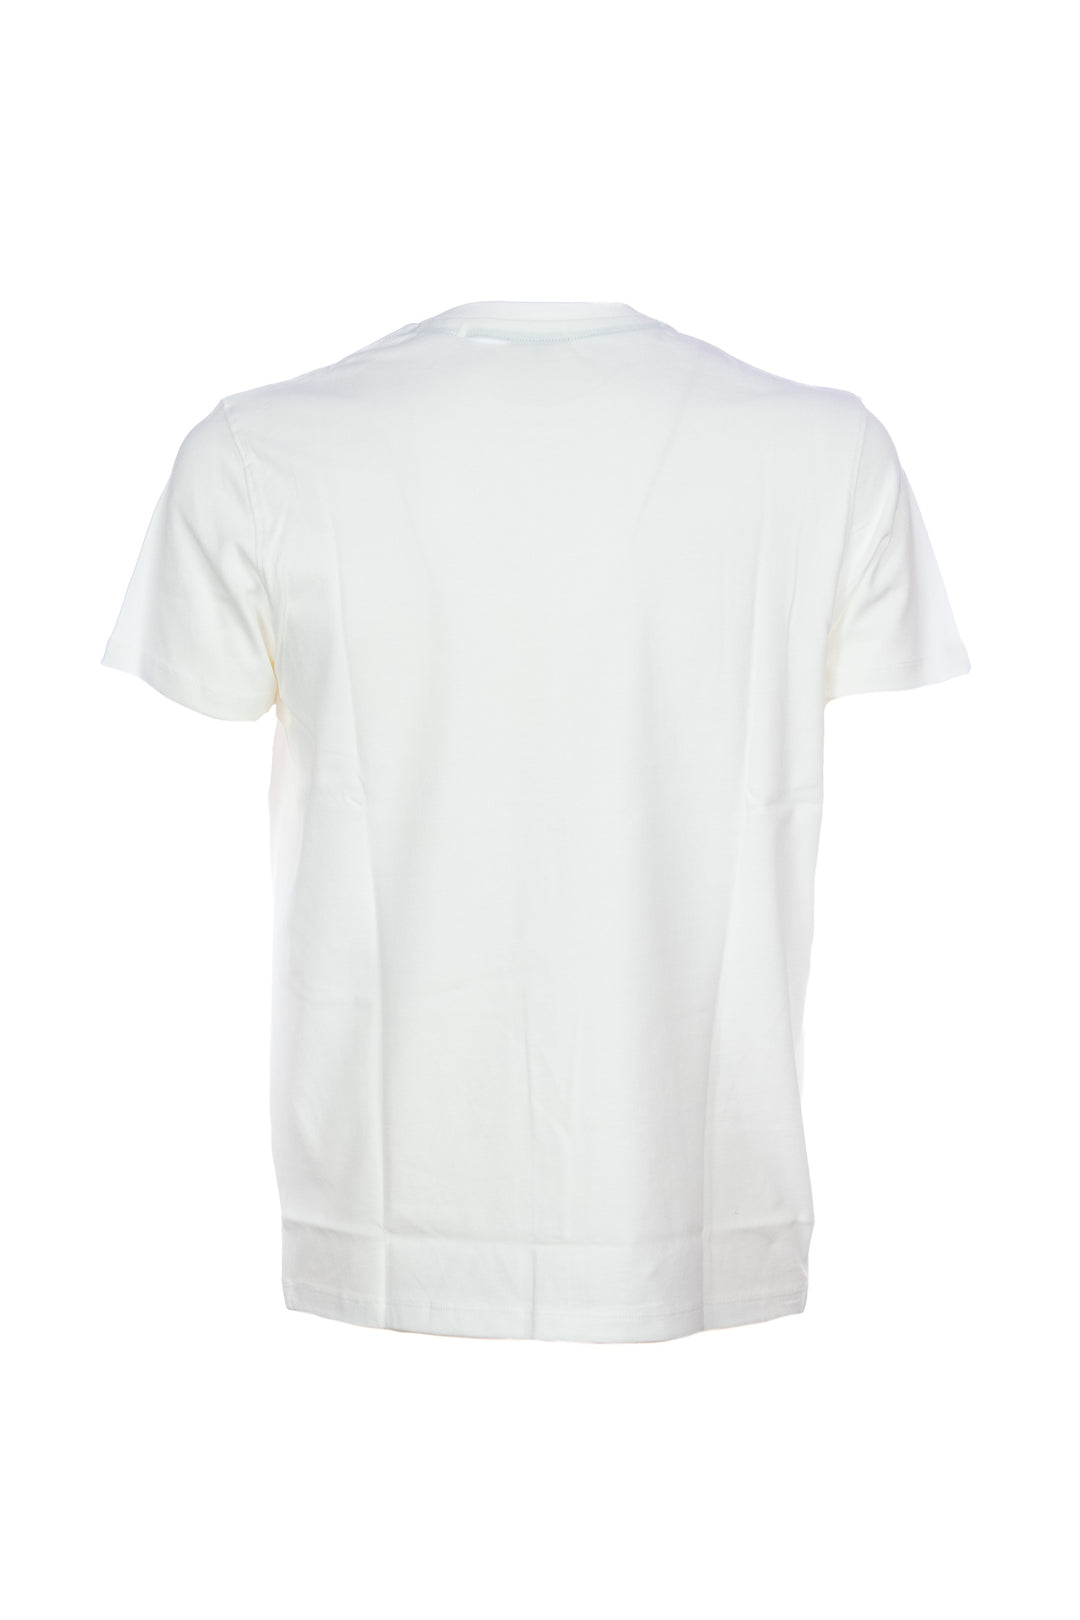 U.S. POLO ASSN. T-shirt bianca in cotone heavy jersey con logo U.S. Polo Assn. - Mancinelli 1954